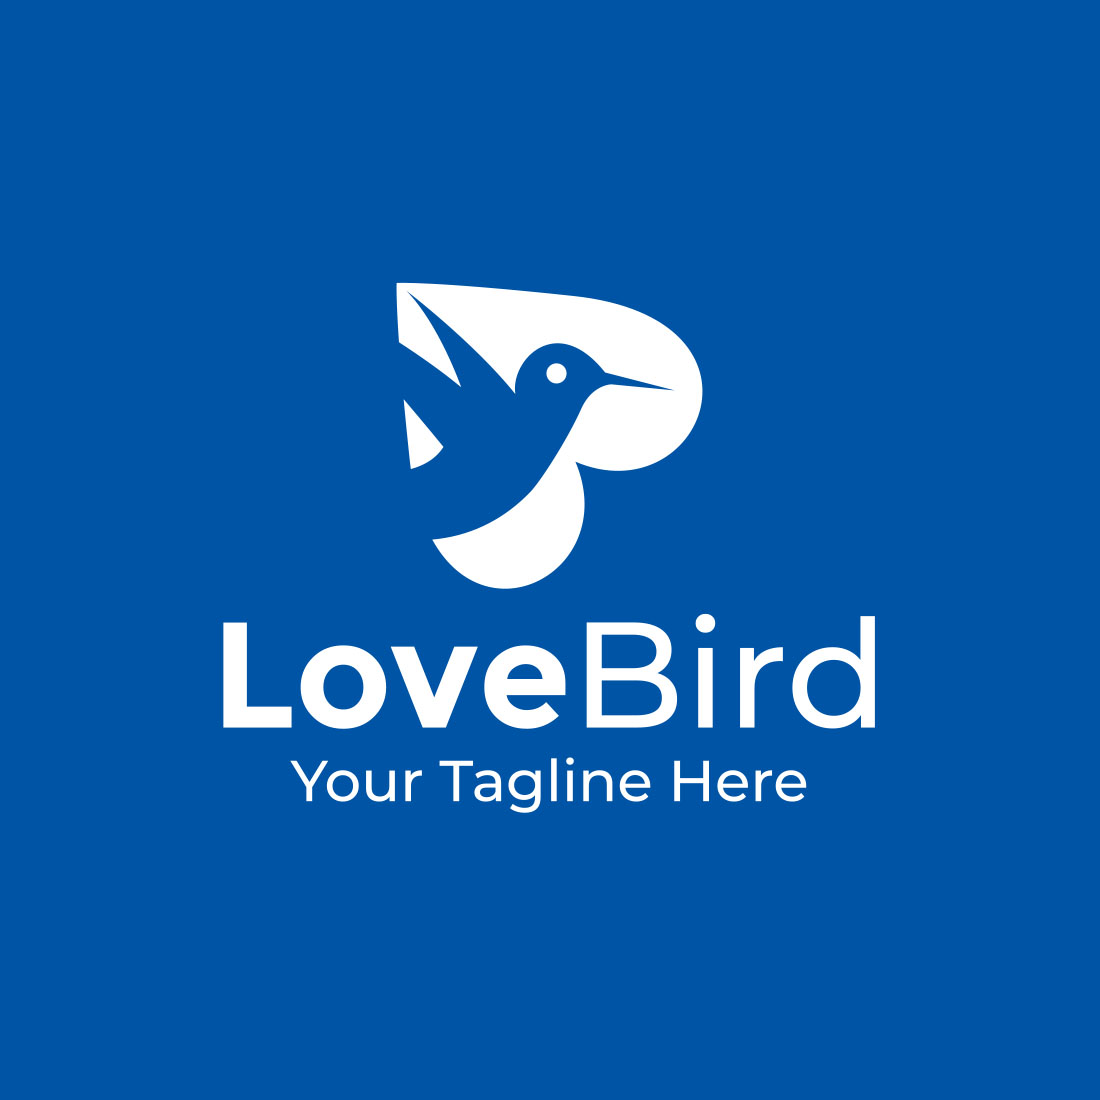 Love Bird Logo with blue background.